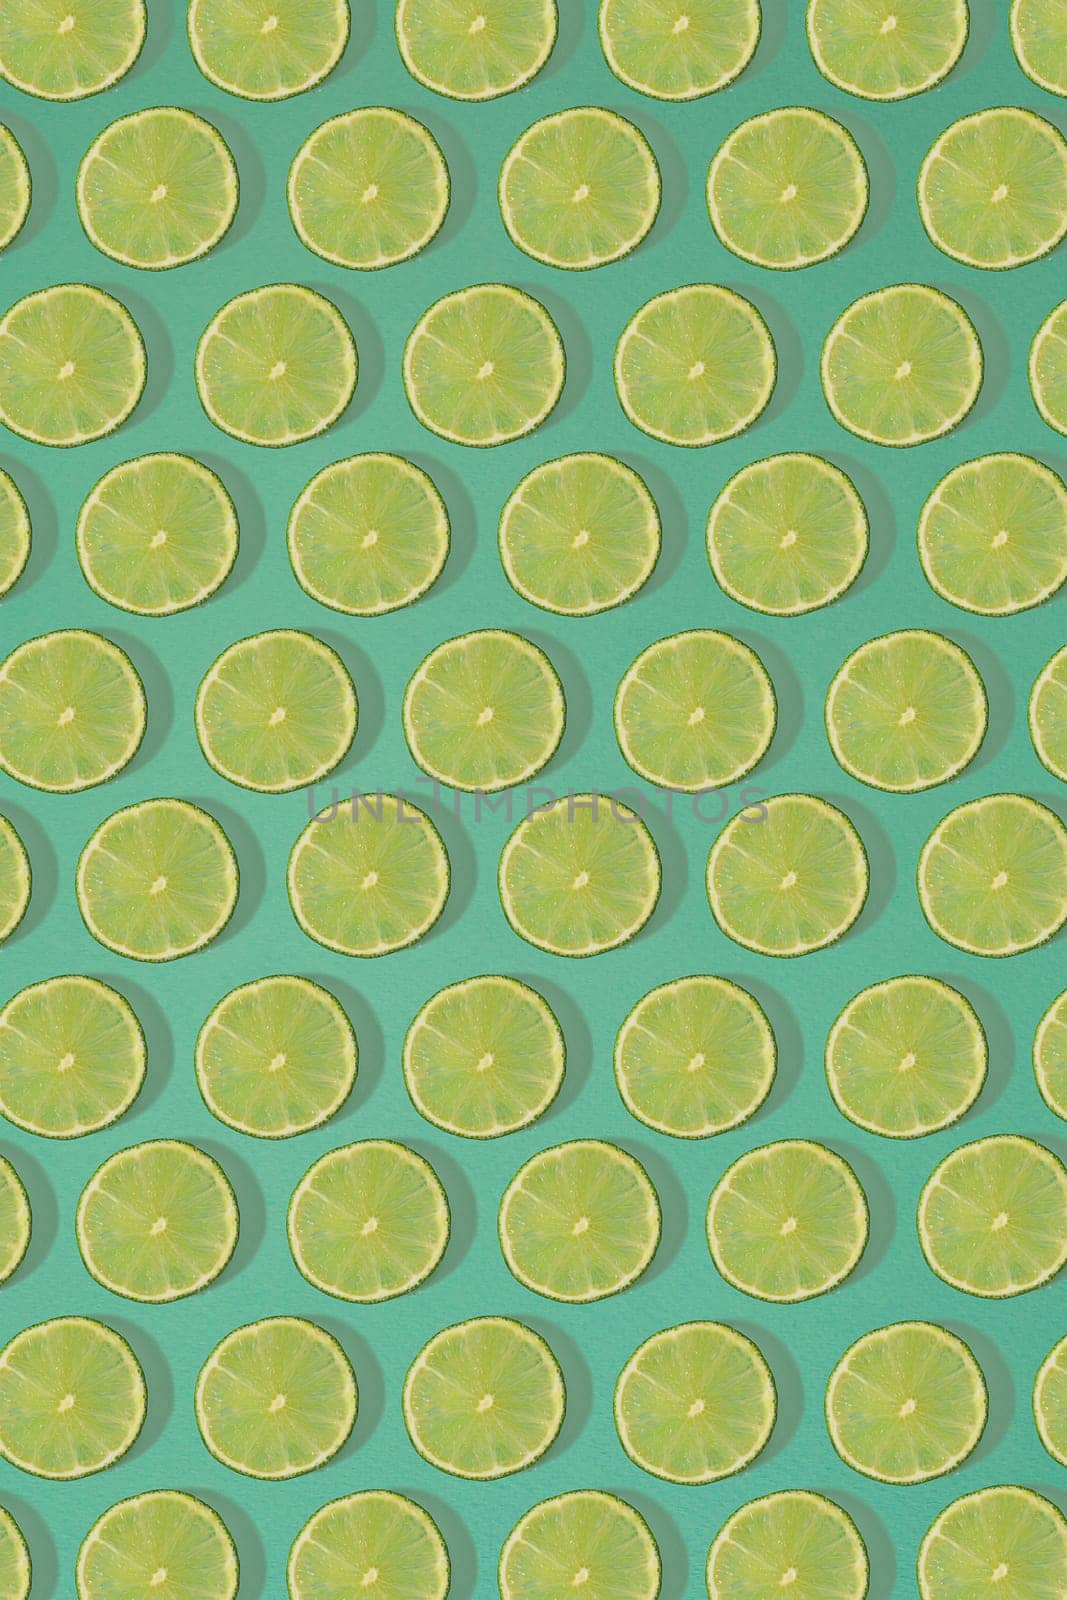 Fruit citrus seamless pattern. Lime tile texture.